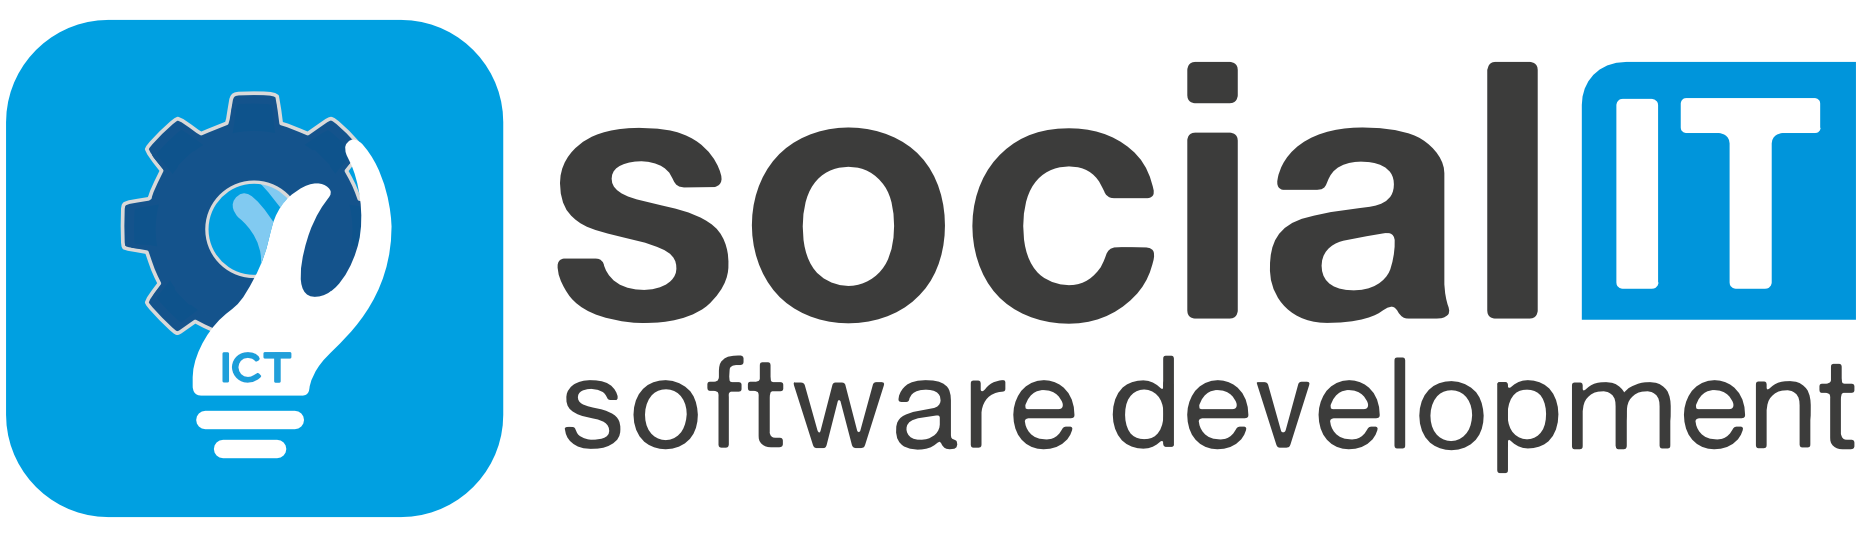 Logo Social IT sofwtare development